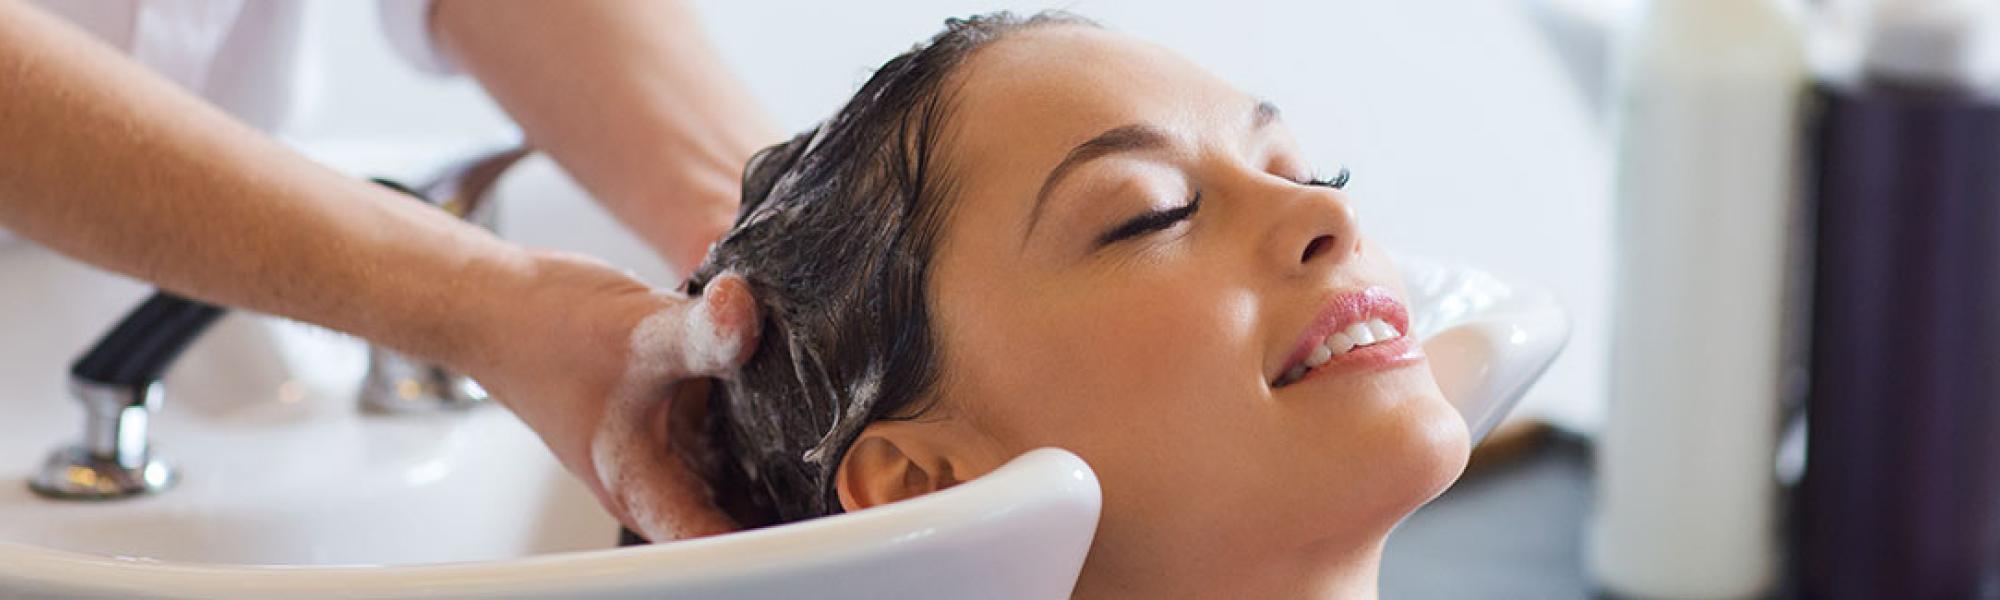 Dosha Salon Spa Hair Services